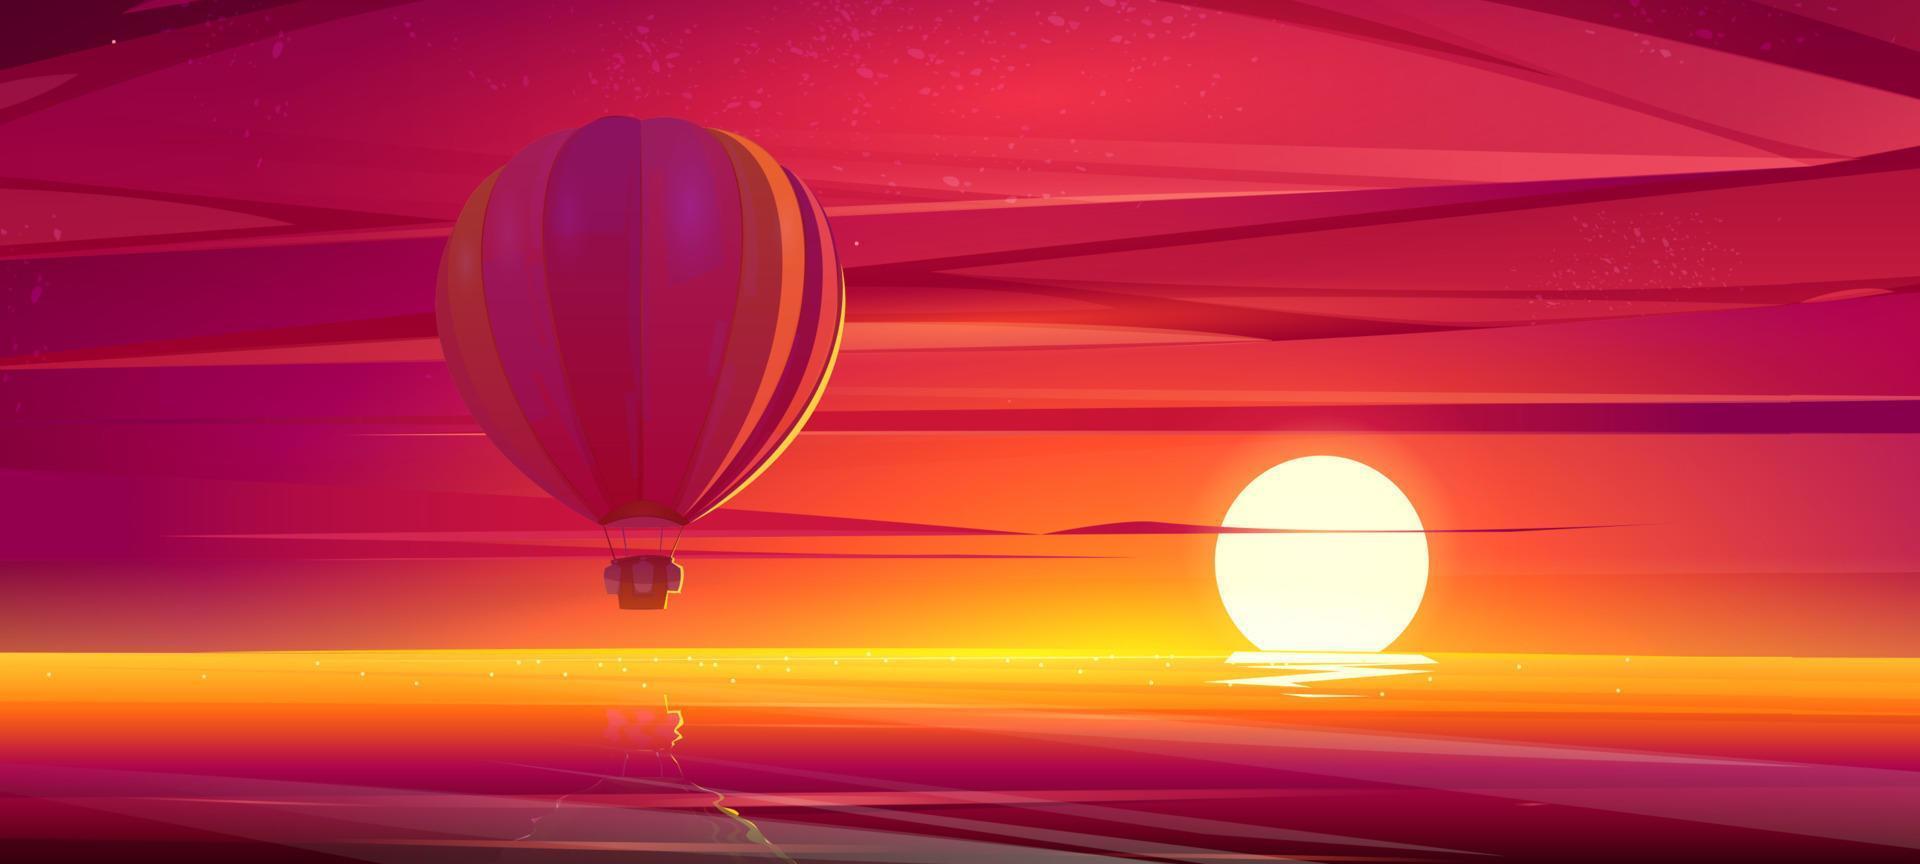 Meereslandschaft mit Heißluftballon bei Sonnenuntergang vektor